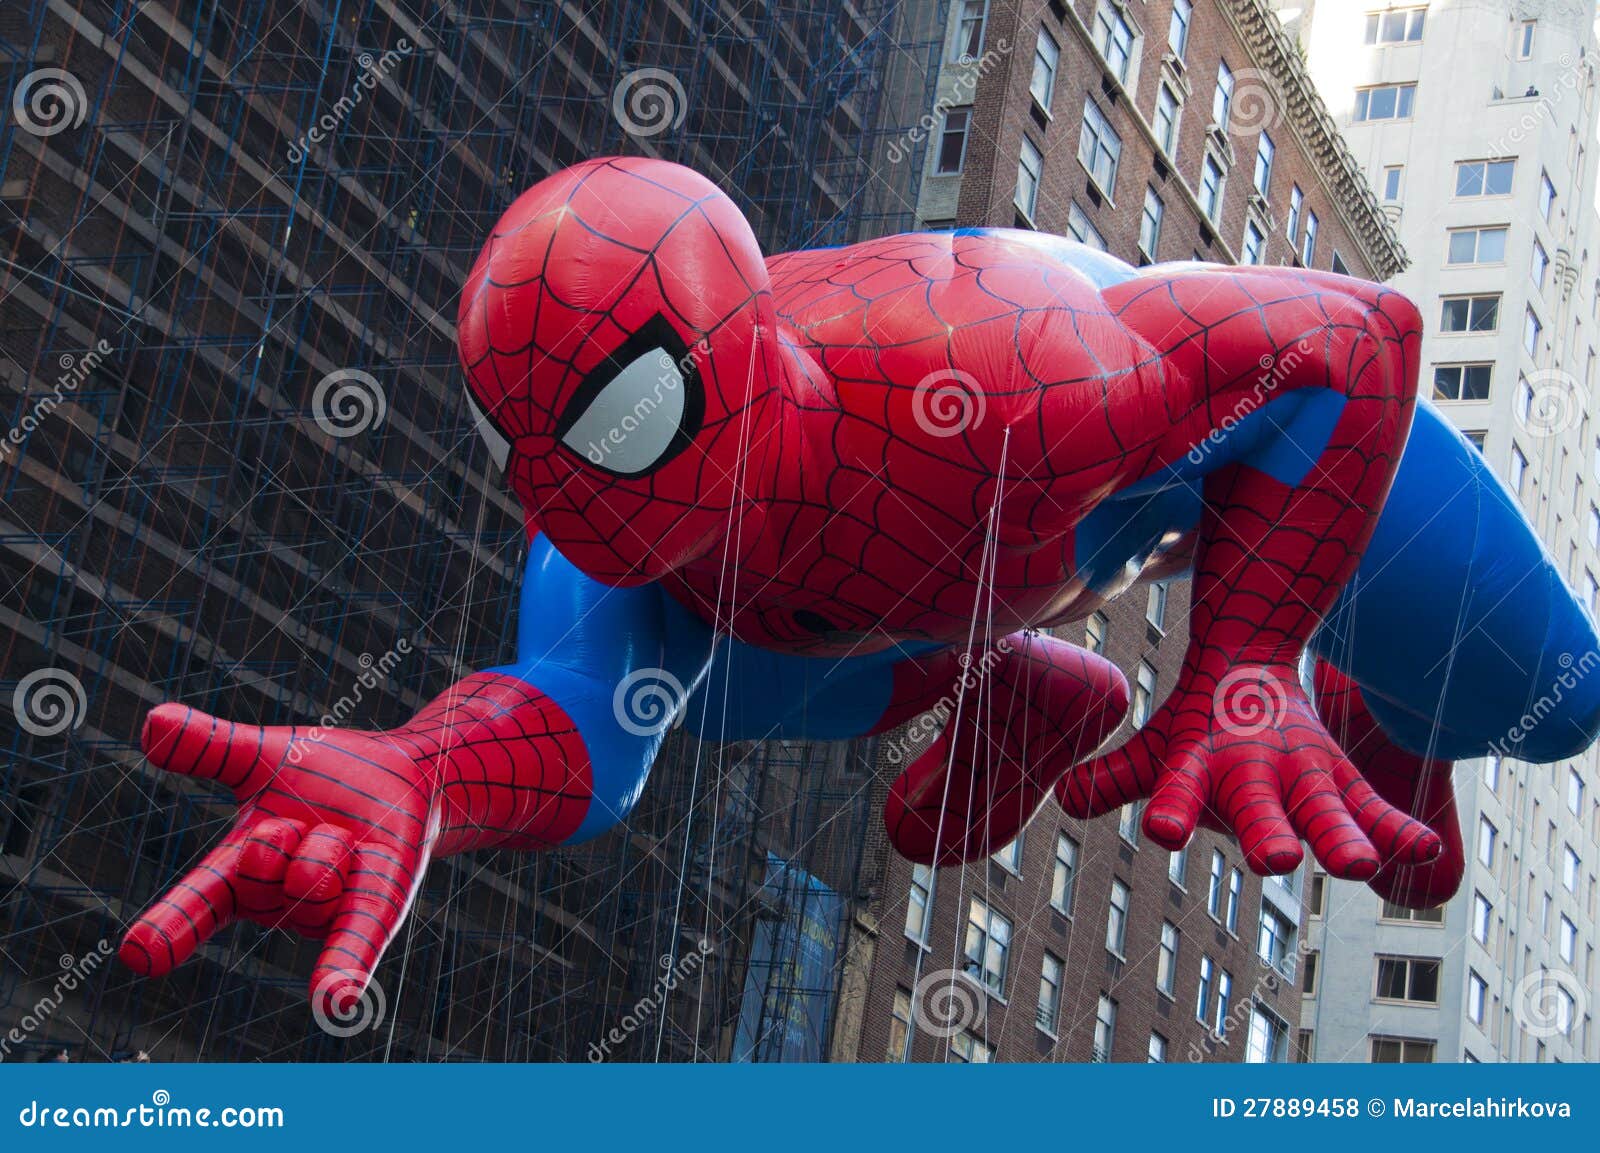 818 Cartoon Spiderman Stock Photos - Free & Royalty-Free Stock Photos from  Dreamstime